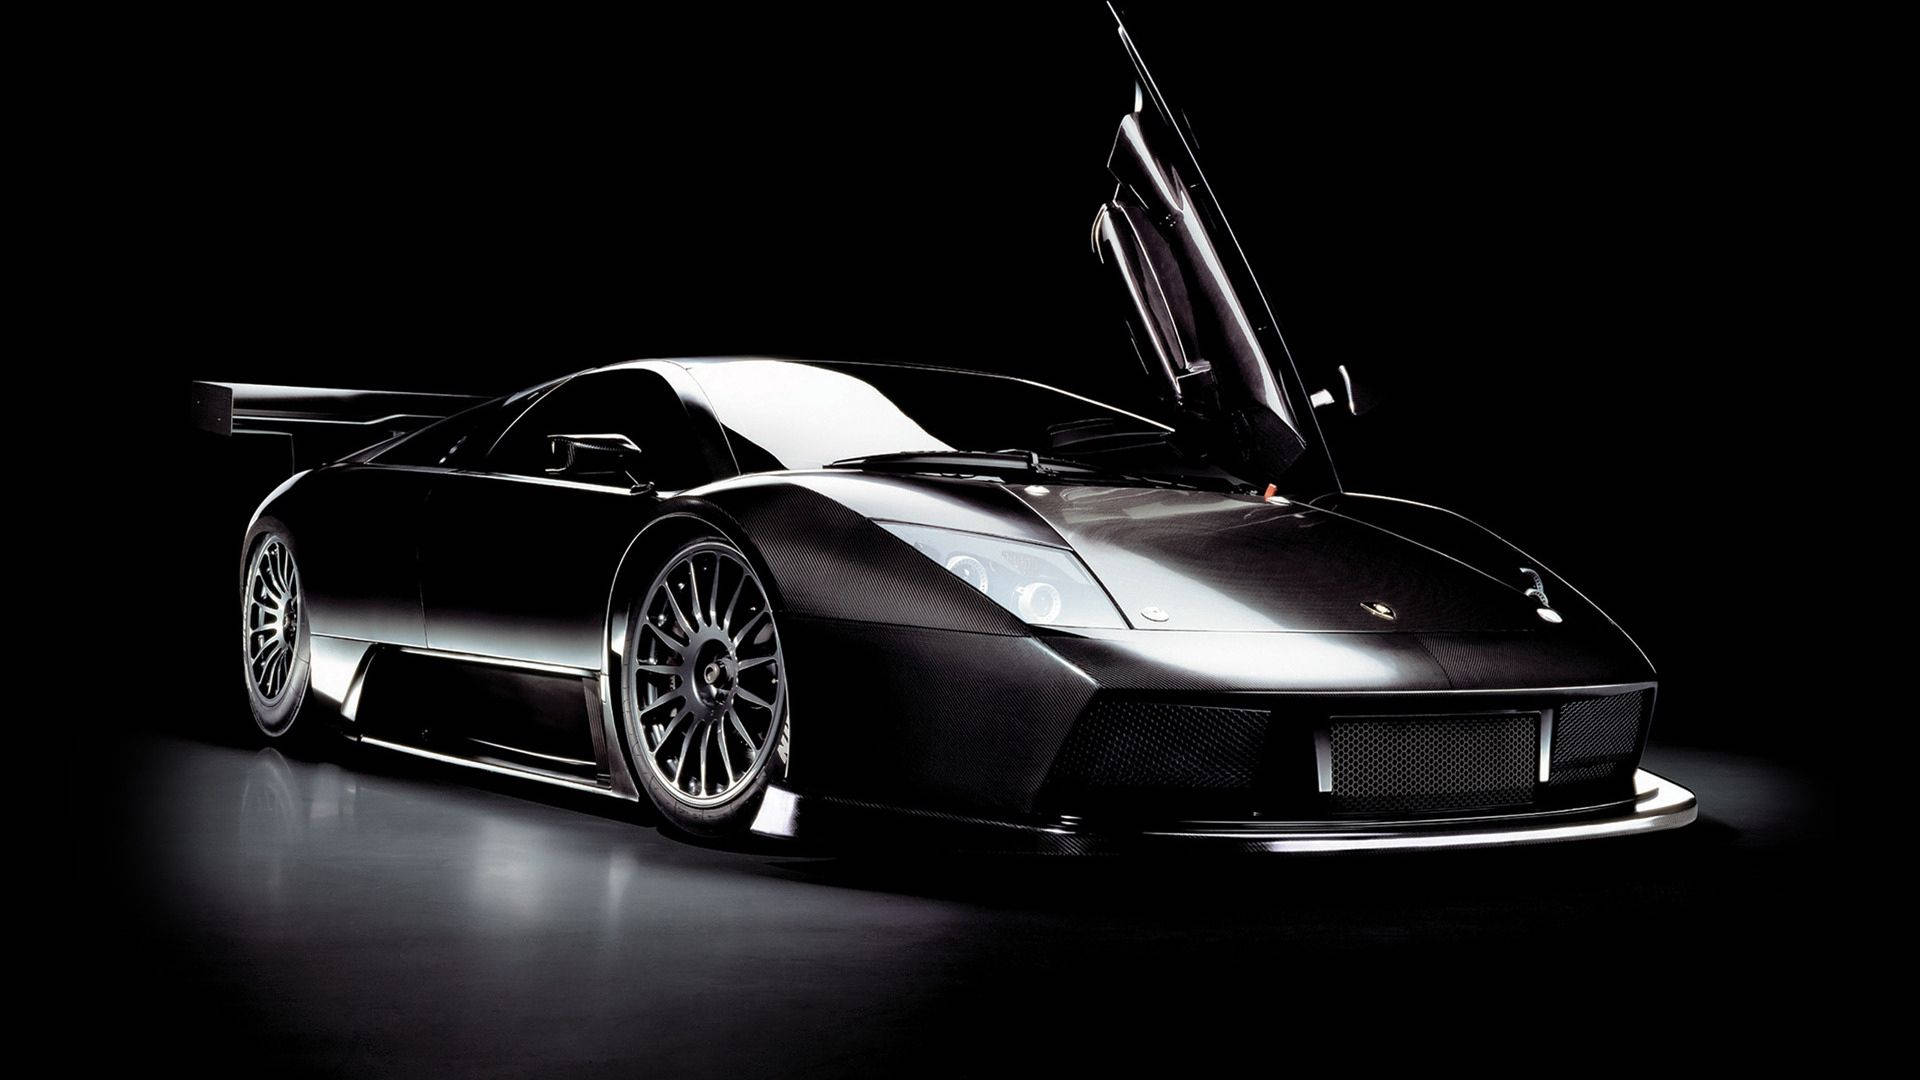 Show Off Your Style with This Stunning Lamborghini Gallardo Wallpaper